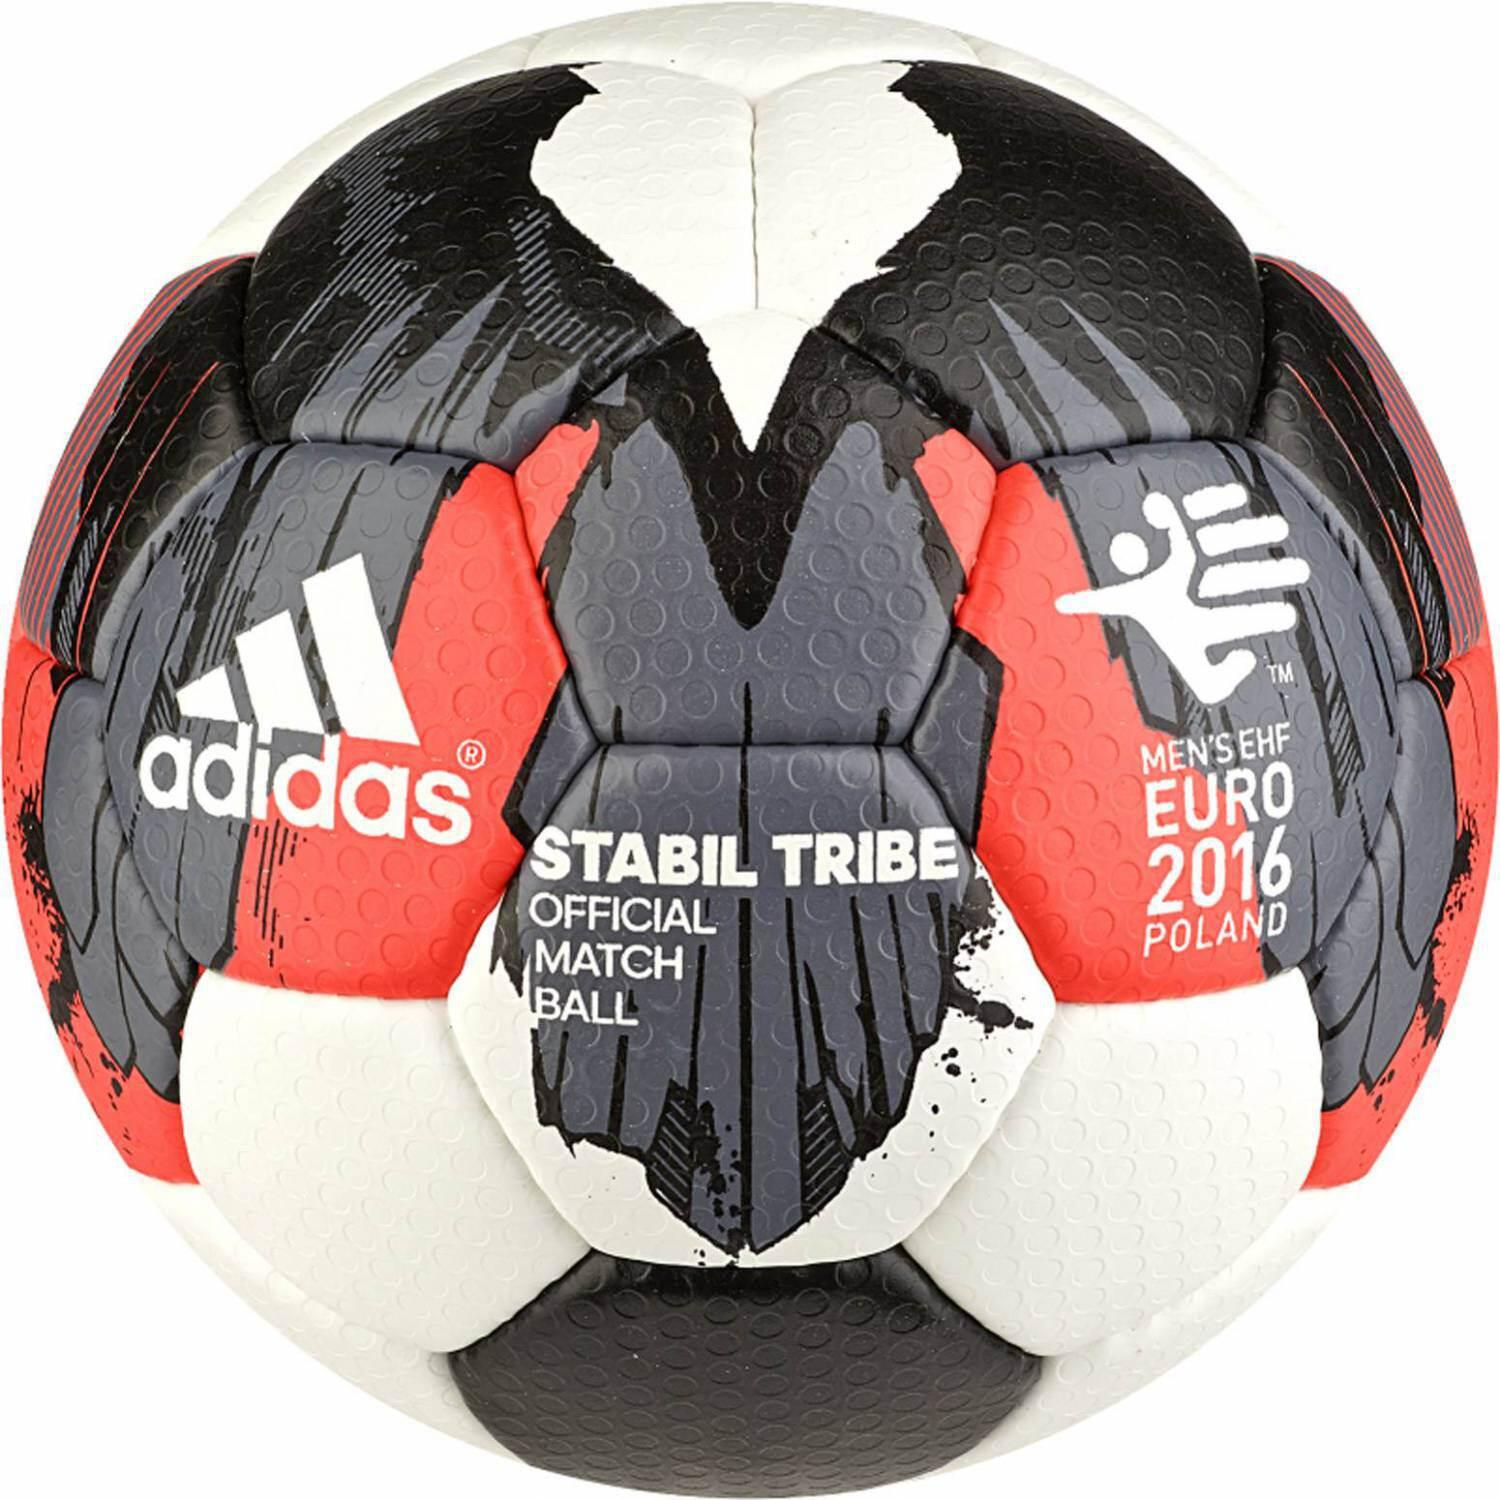 adidas Stabil Tribe Euro 2016 Handball